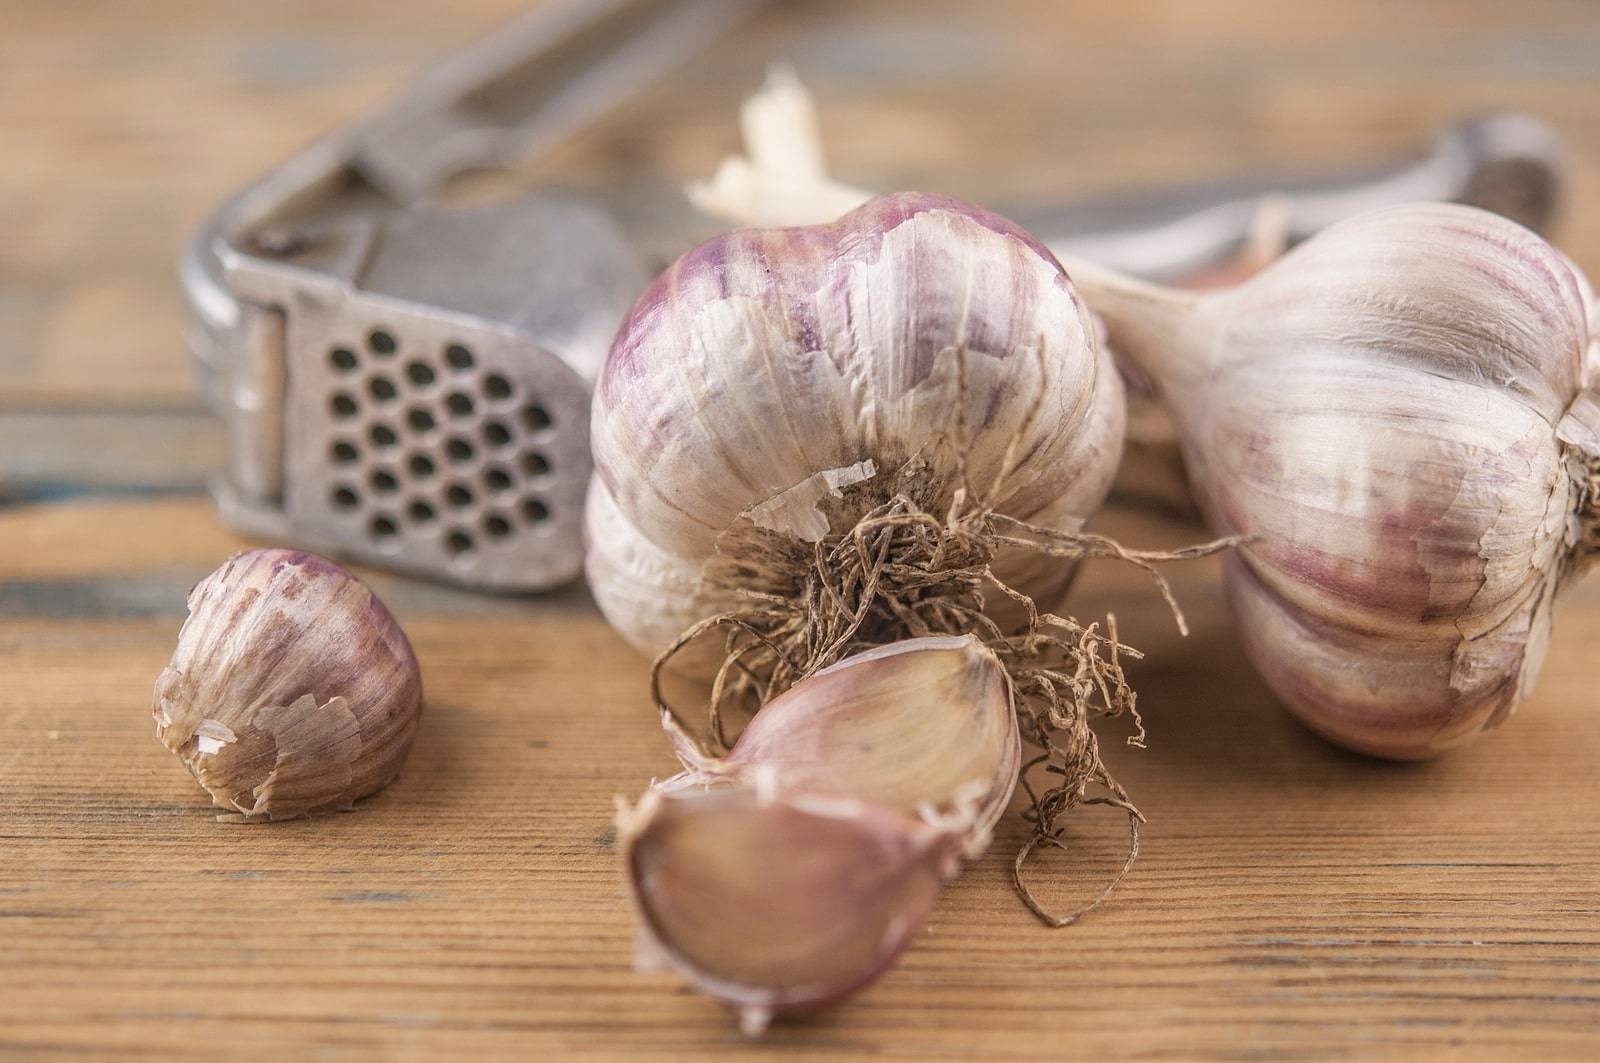 The Harsh: Non-Regulated Garlic